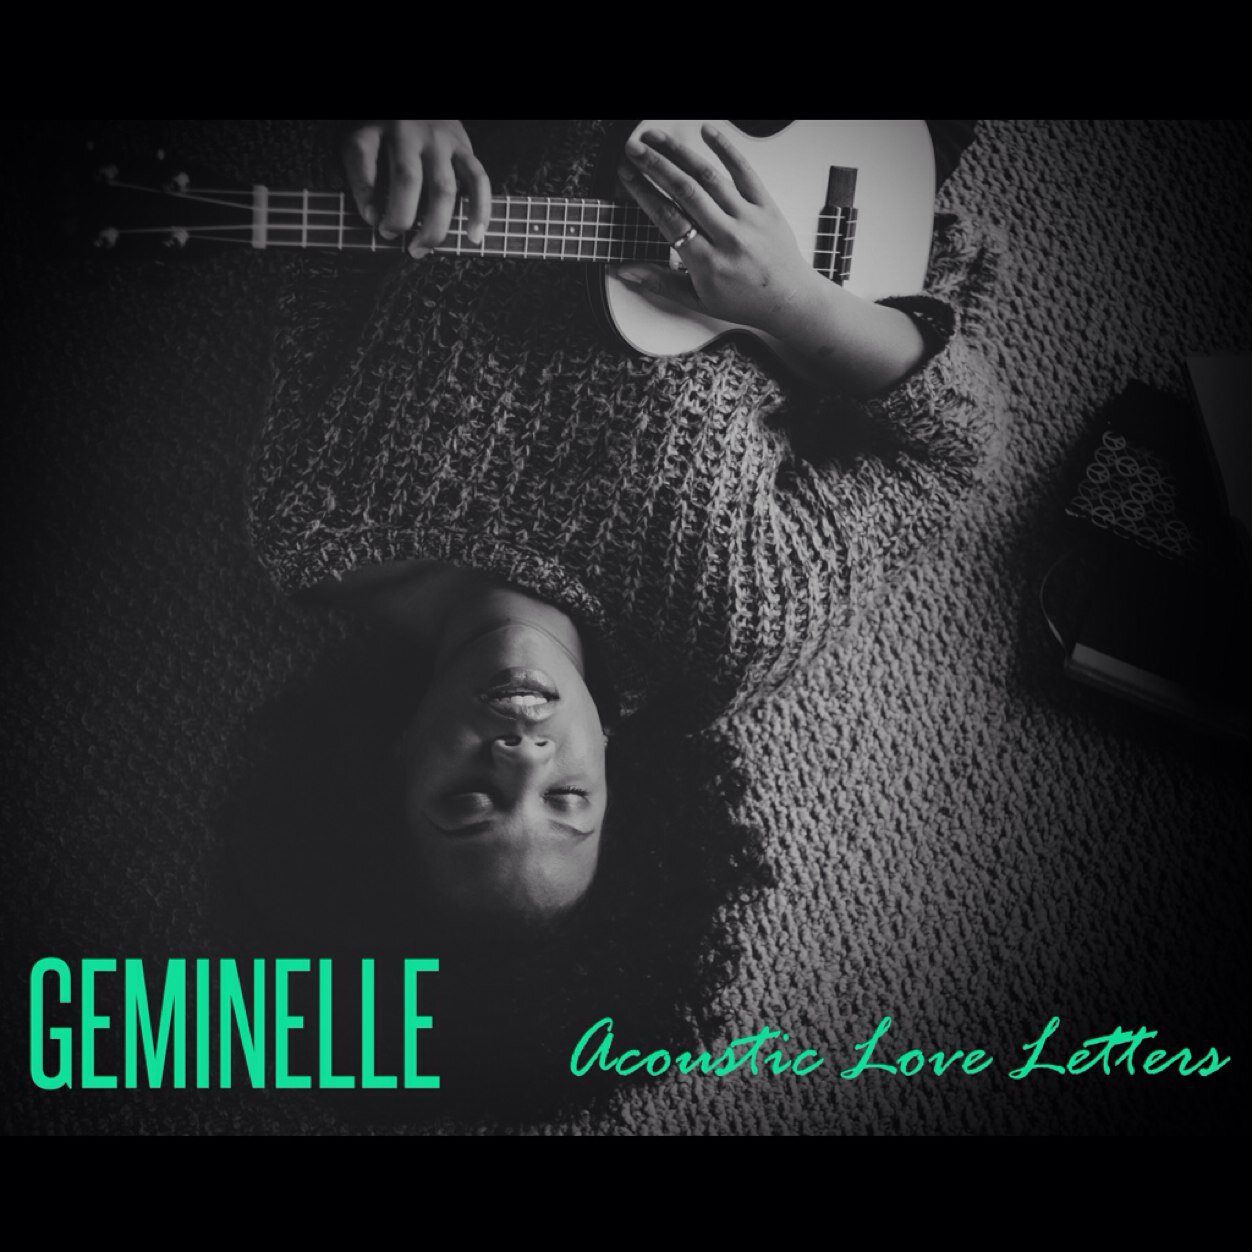 Geminelle - Acoustic Love Letters